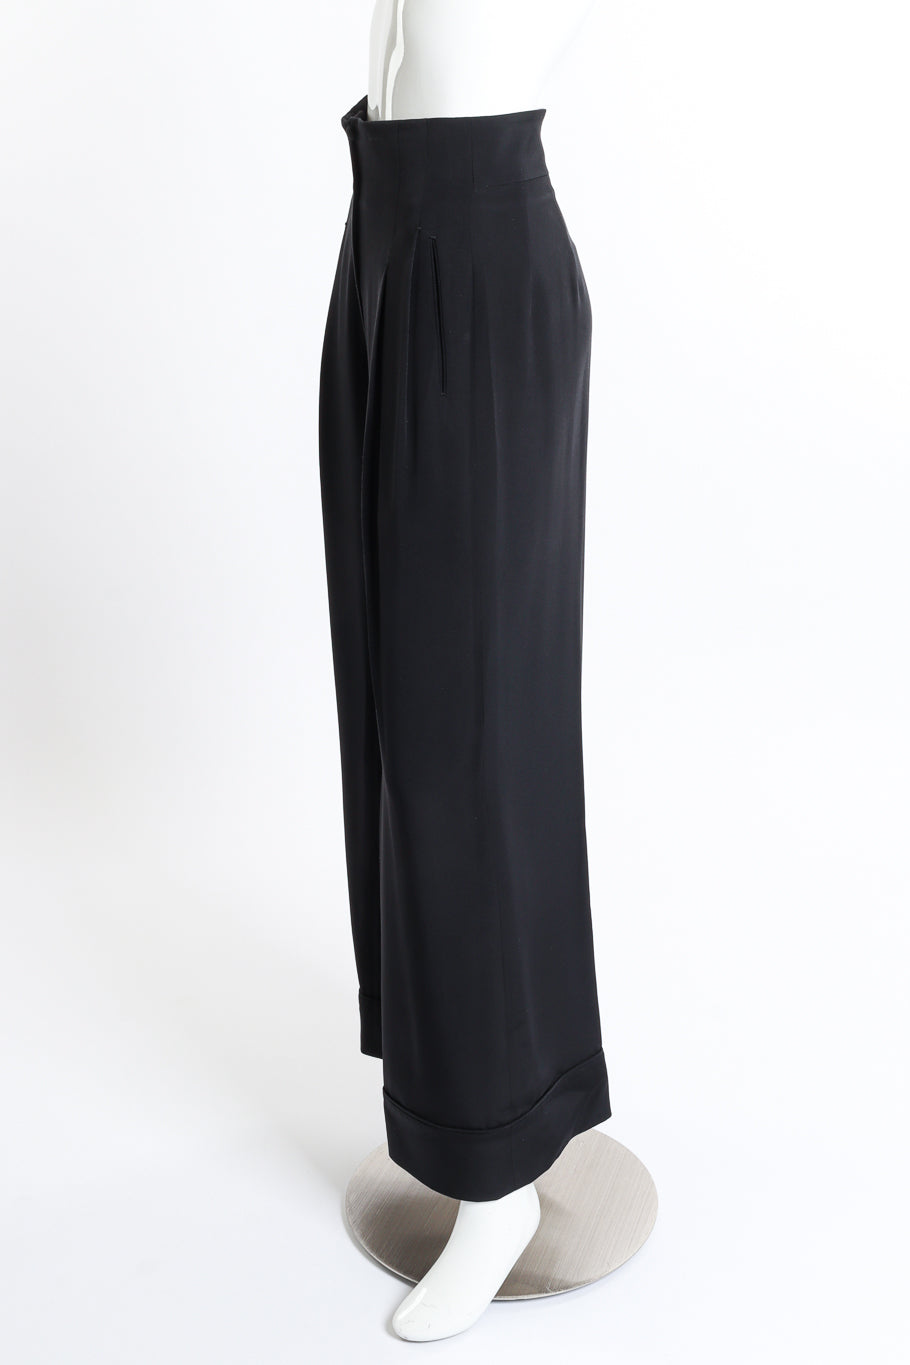 Vintage Richard Tyler wide leg high waisted black pants left side view as worn on mannequin @RECESS LA